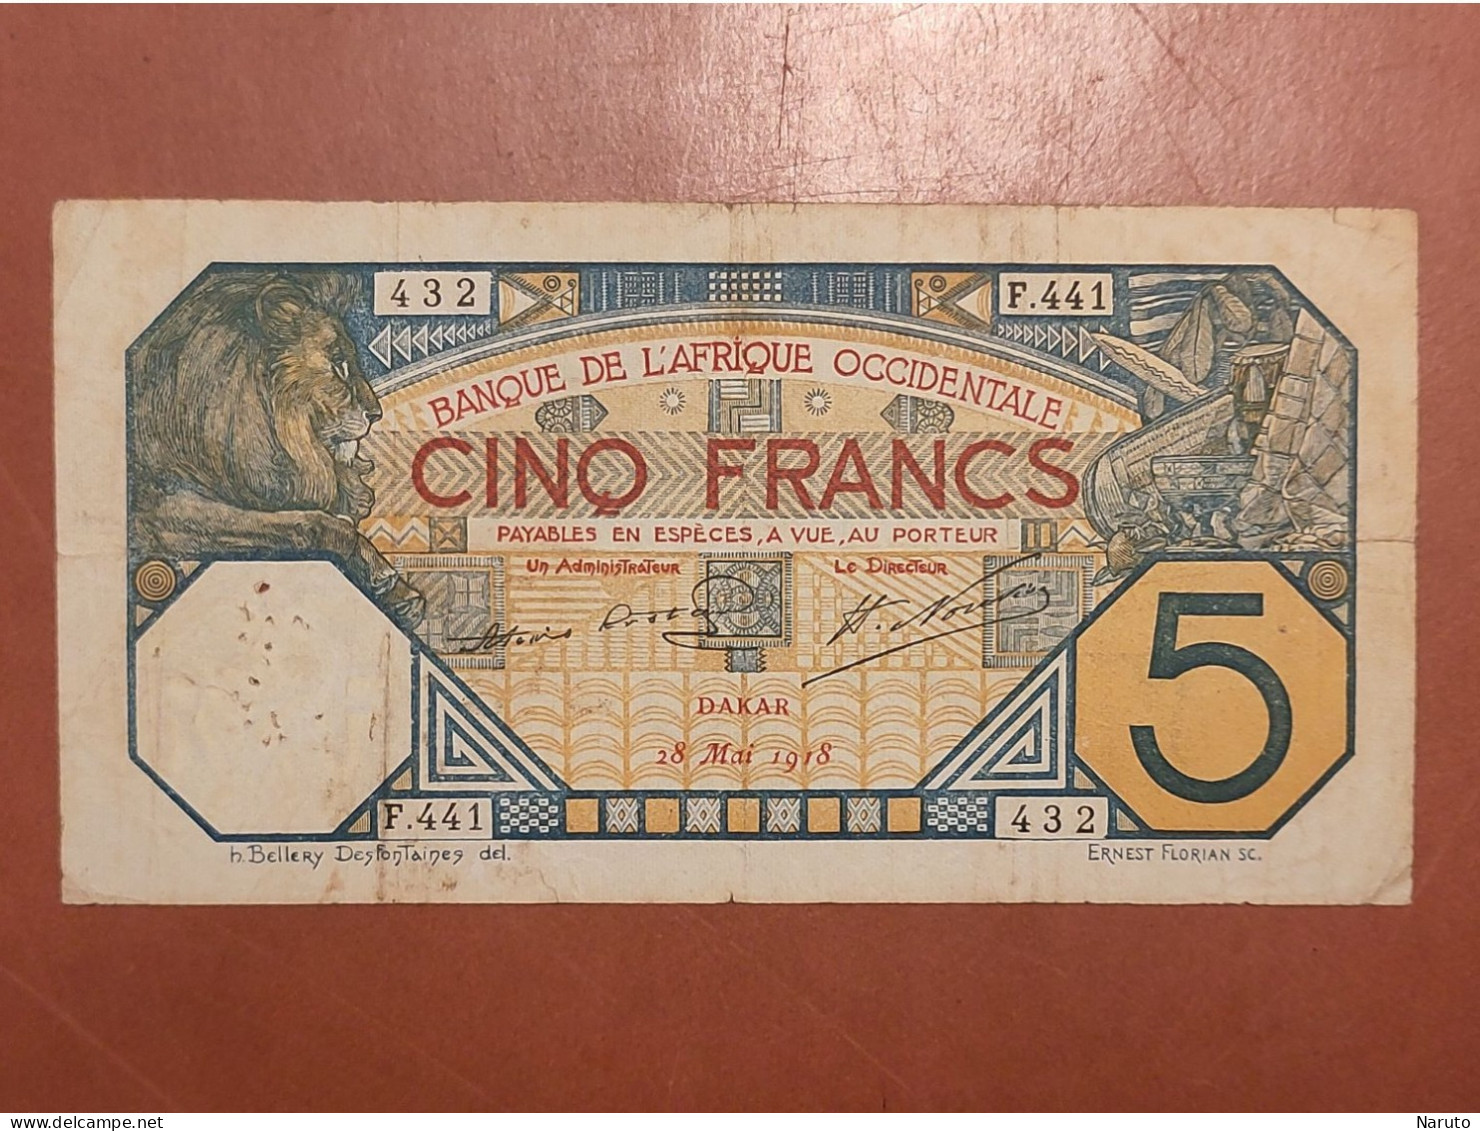 Billet De 5 Francs De La Banque De L'Afrique Occidentale, Dakar, 28 Mai 1918 - Vrac - Billets